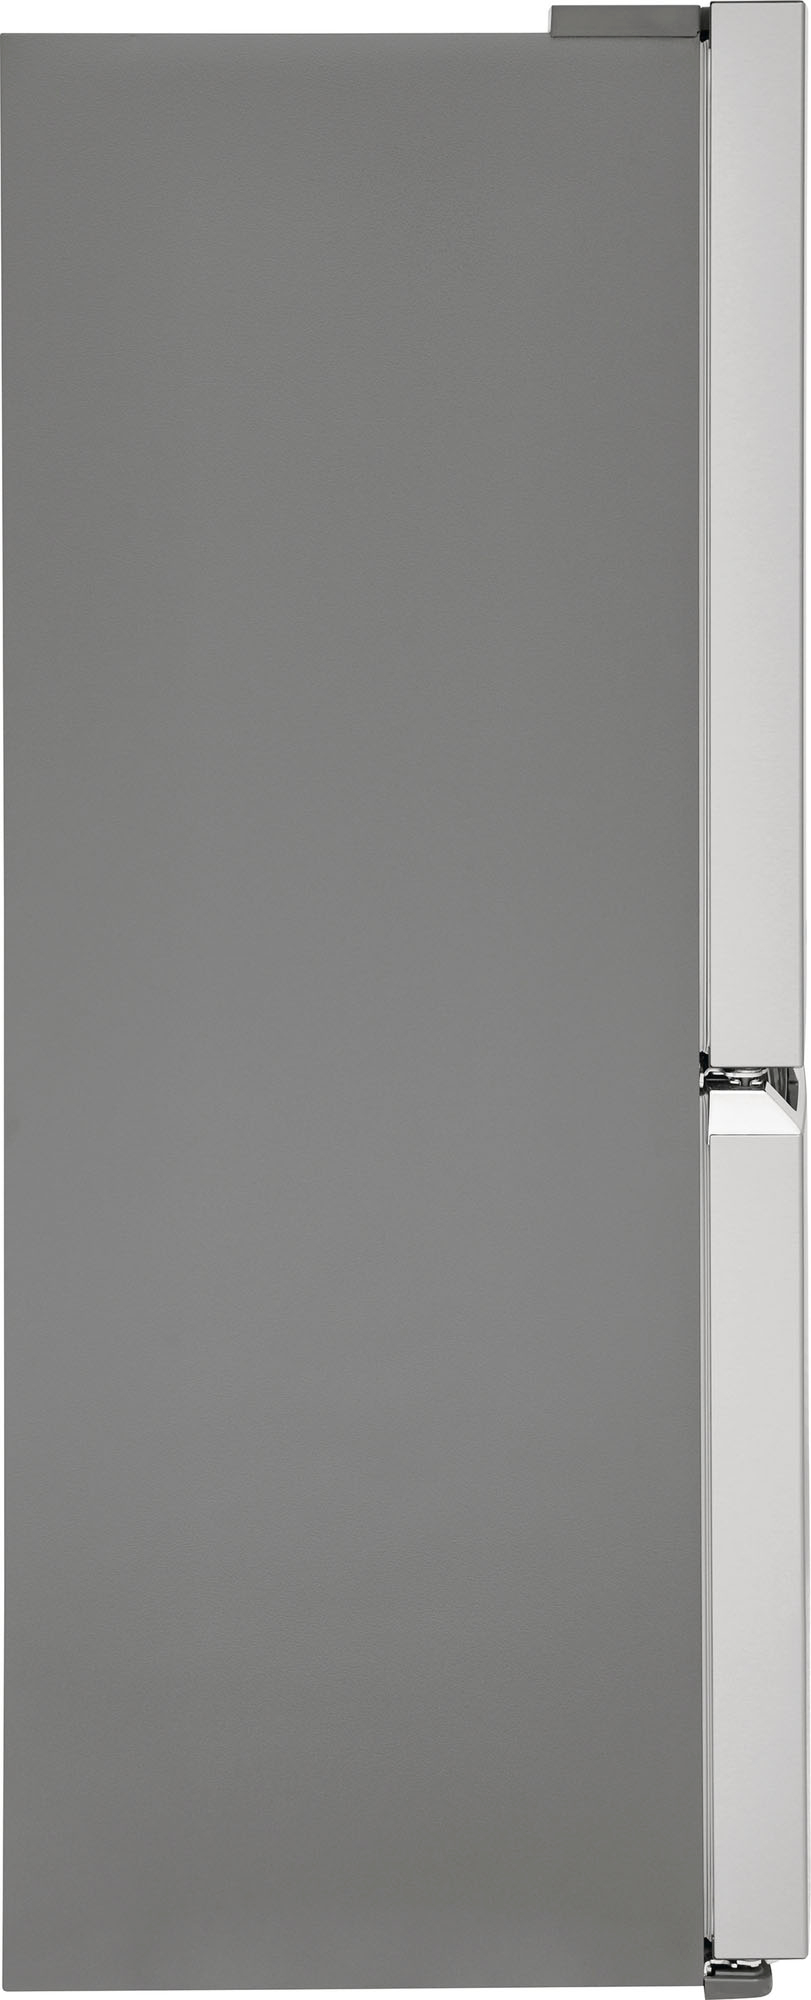 Frigidaire Gallery Quattro GRQC2255BF French-door refrigerator